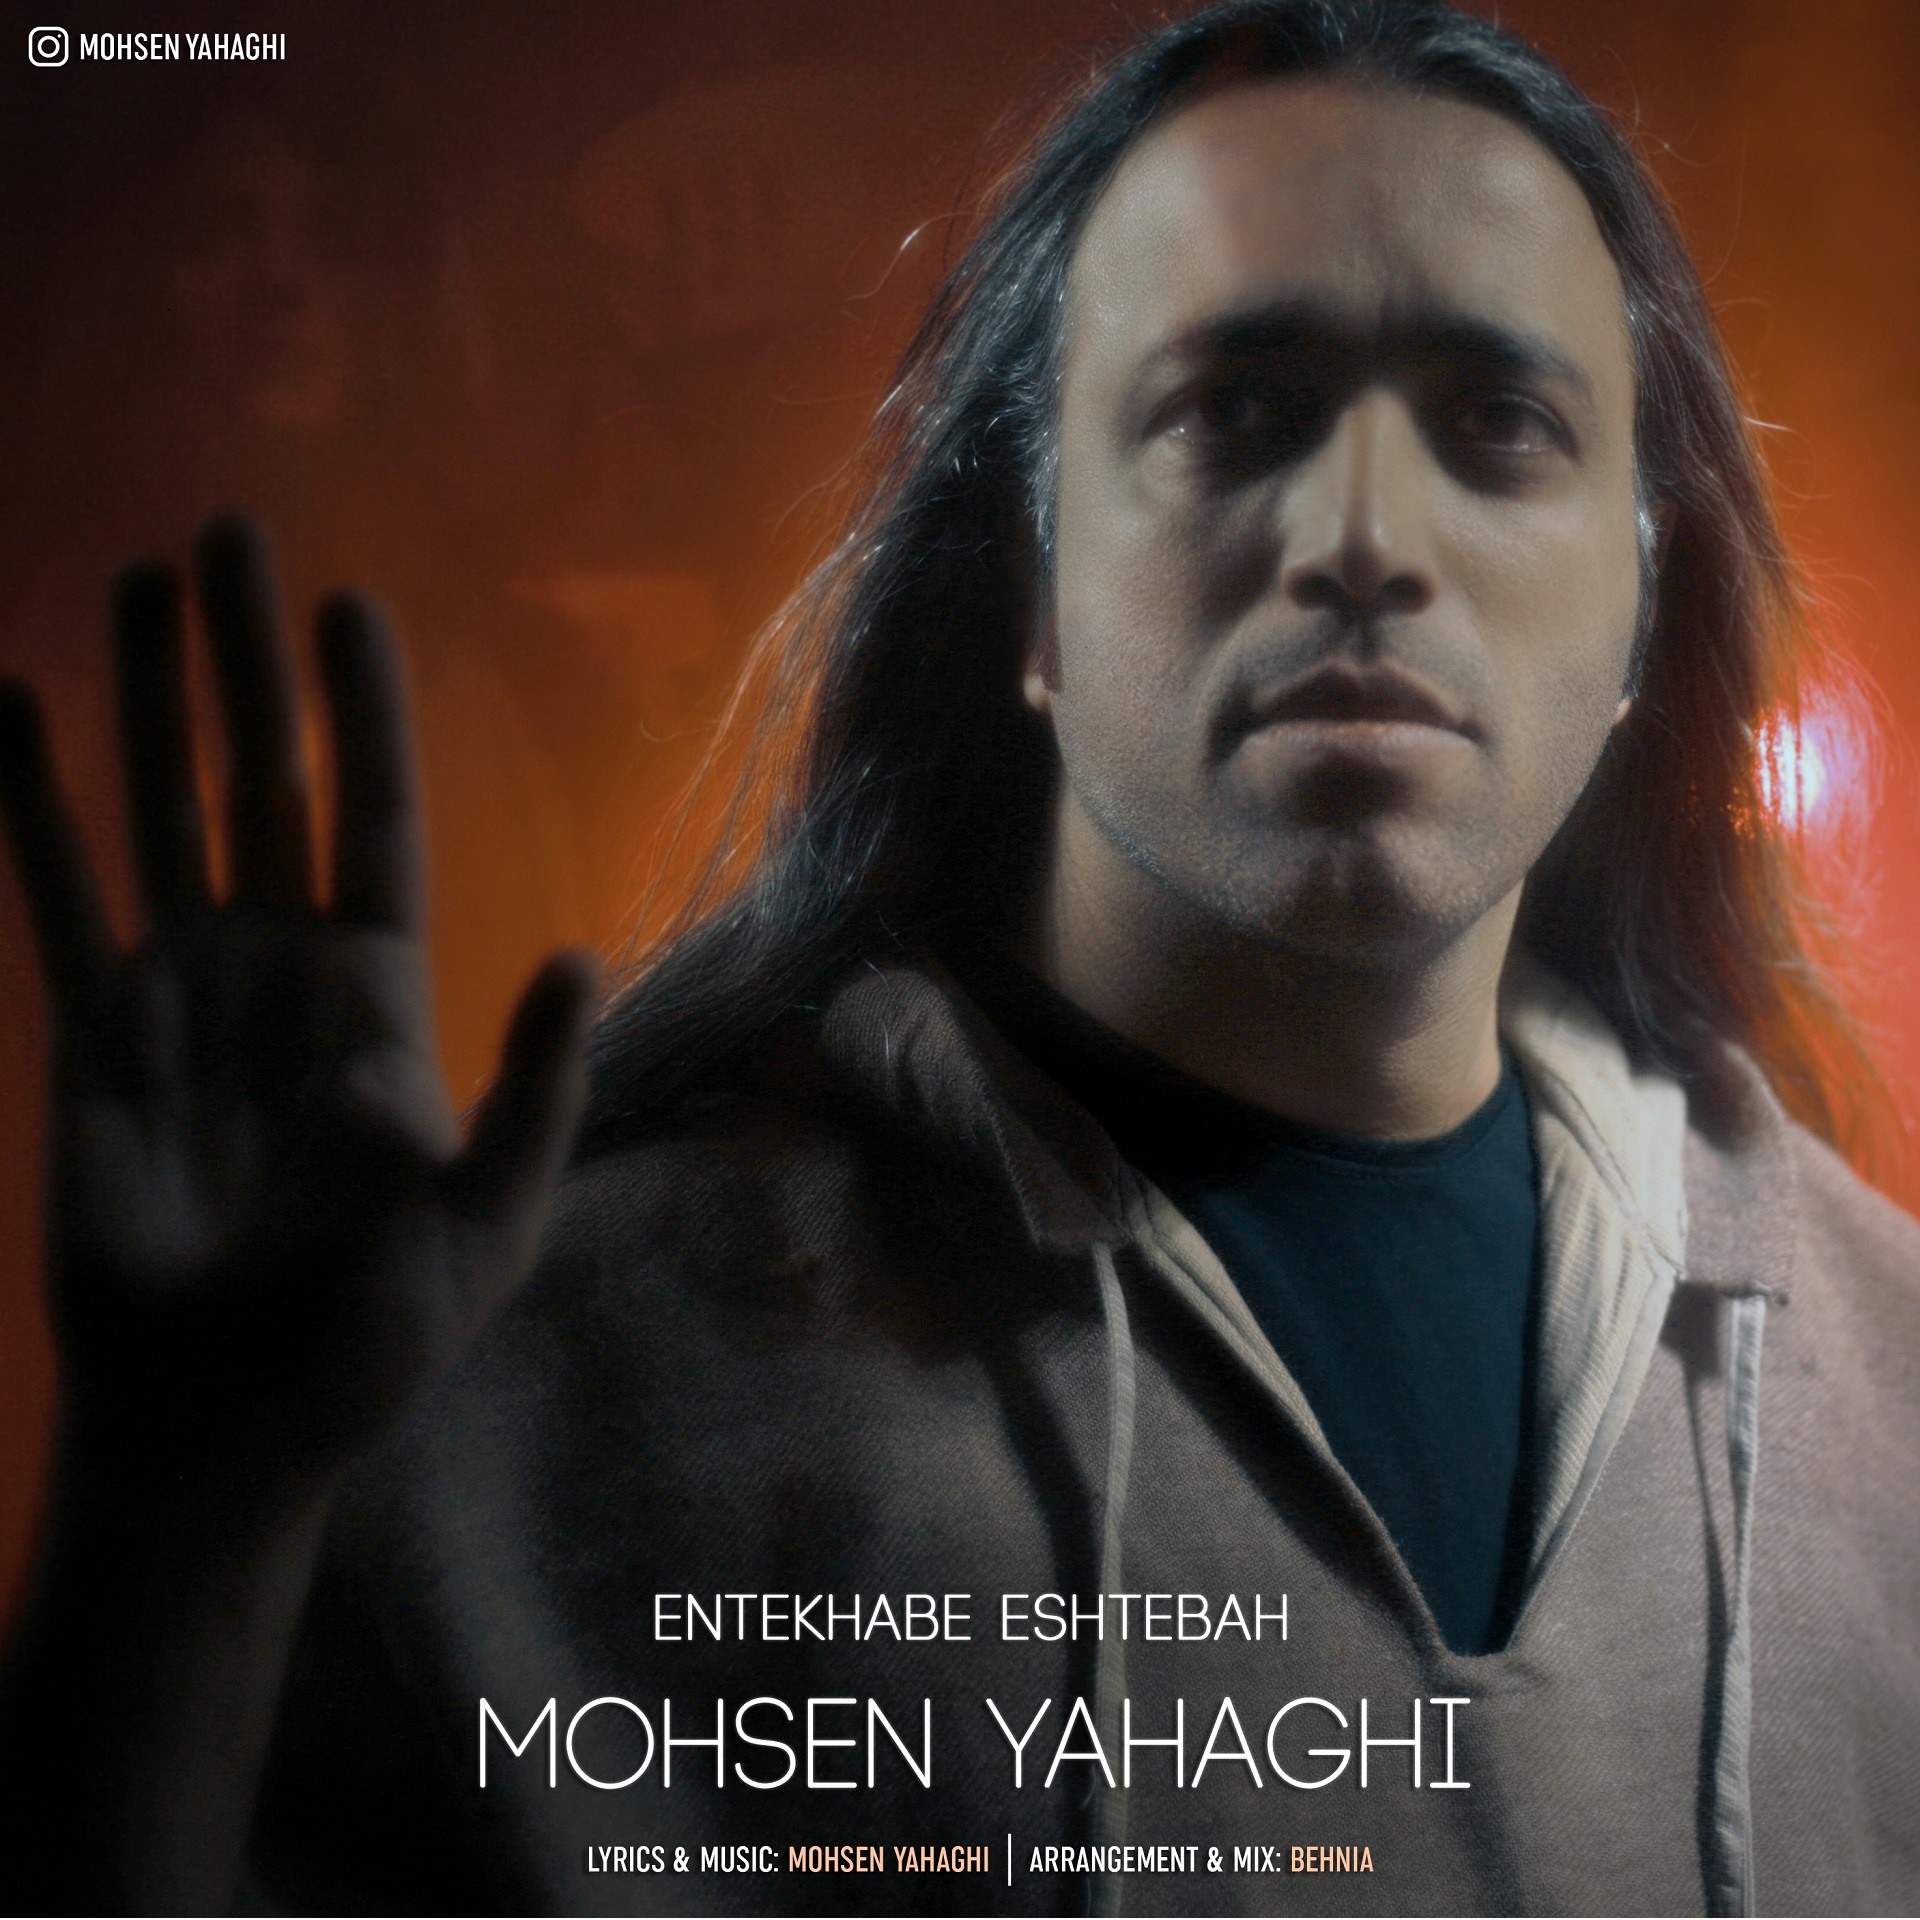  دانلود آهنگ جدید محسن یاحقی - انتخاب اشتباه | Download New Music By Mohsen Yahaghi - Entekhabe Eshtebah